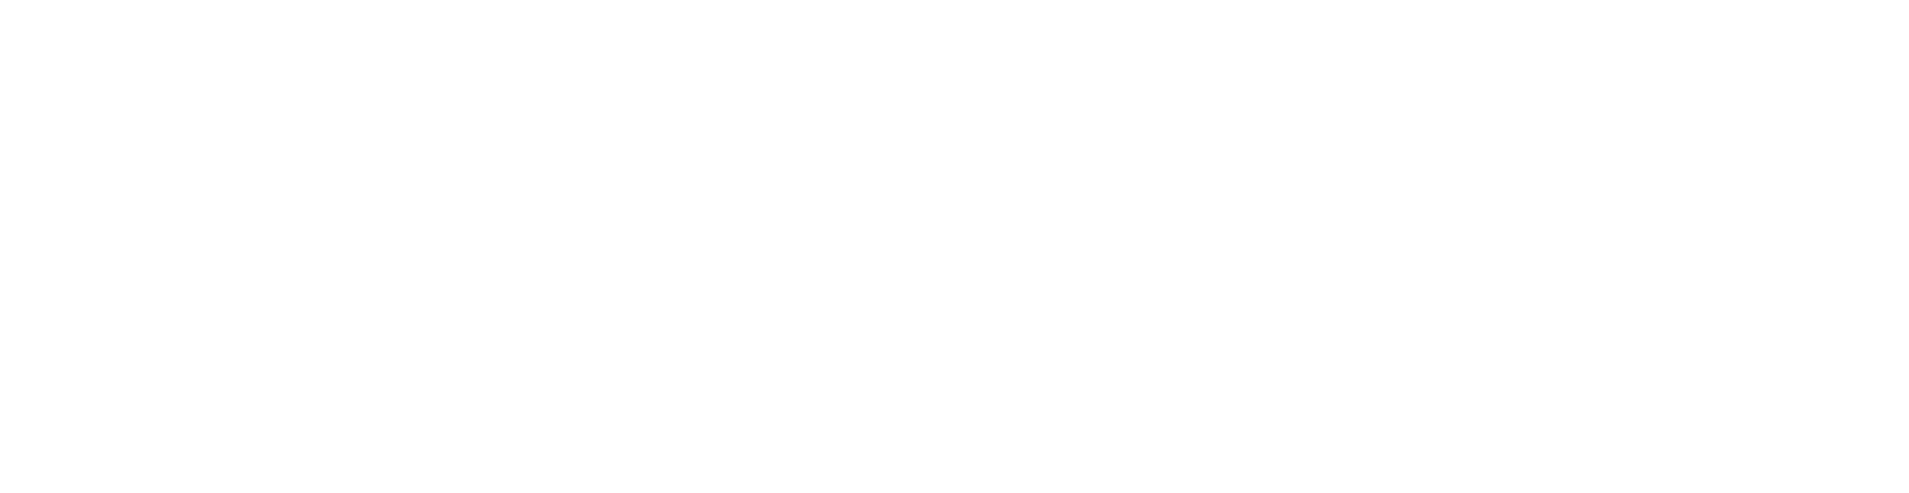 Sustrans Join the Movement I Bike Logo